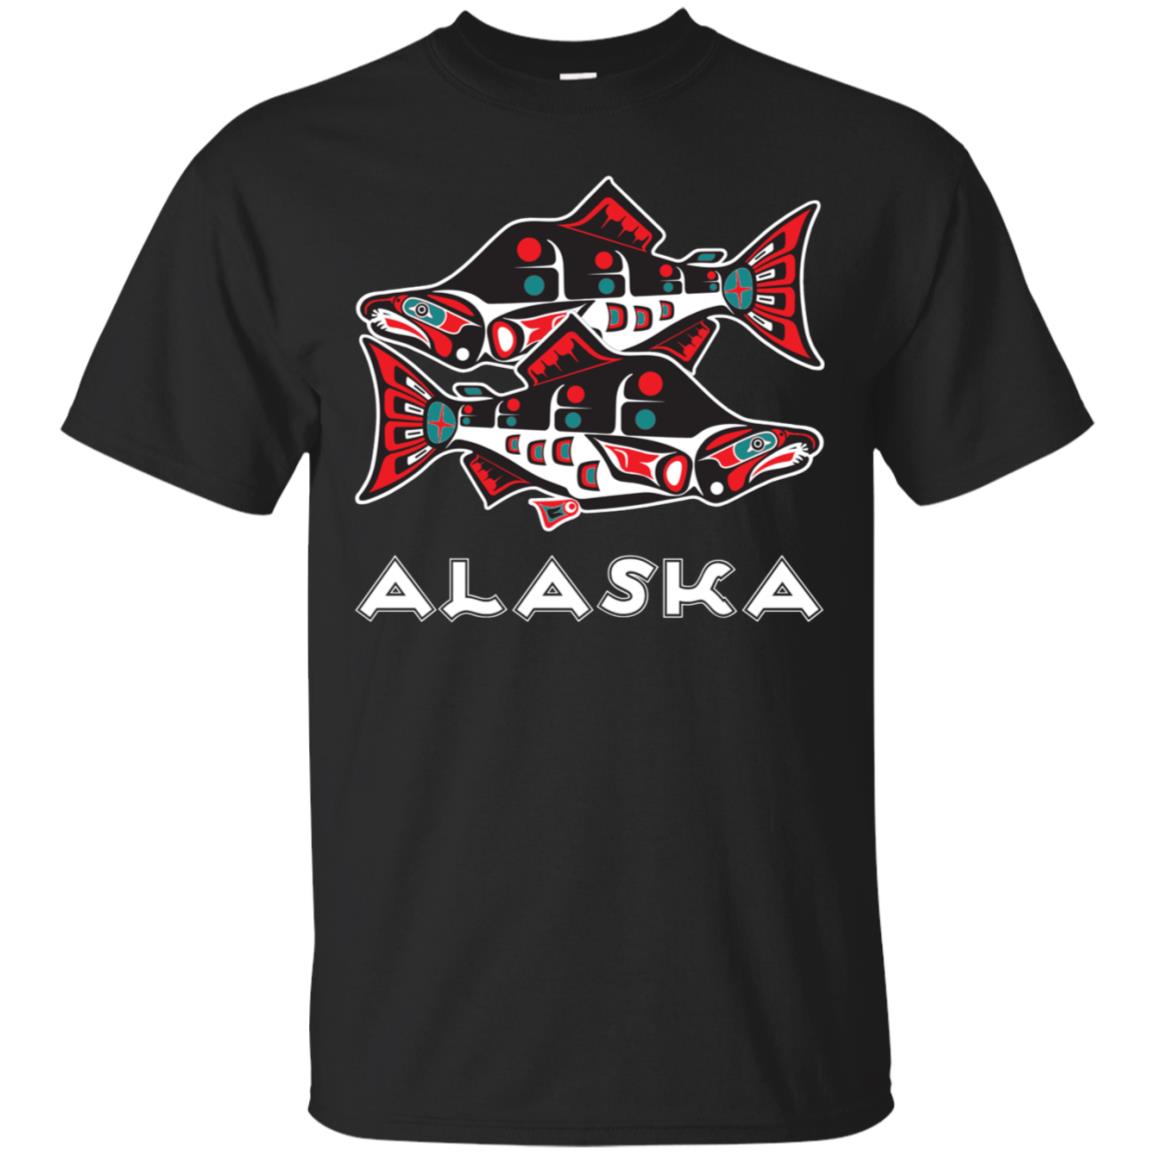 Alaska Salmon Fishing Native American Tlingit Art Shirt Lswt